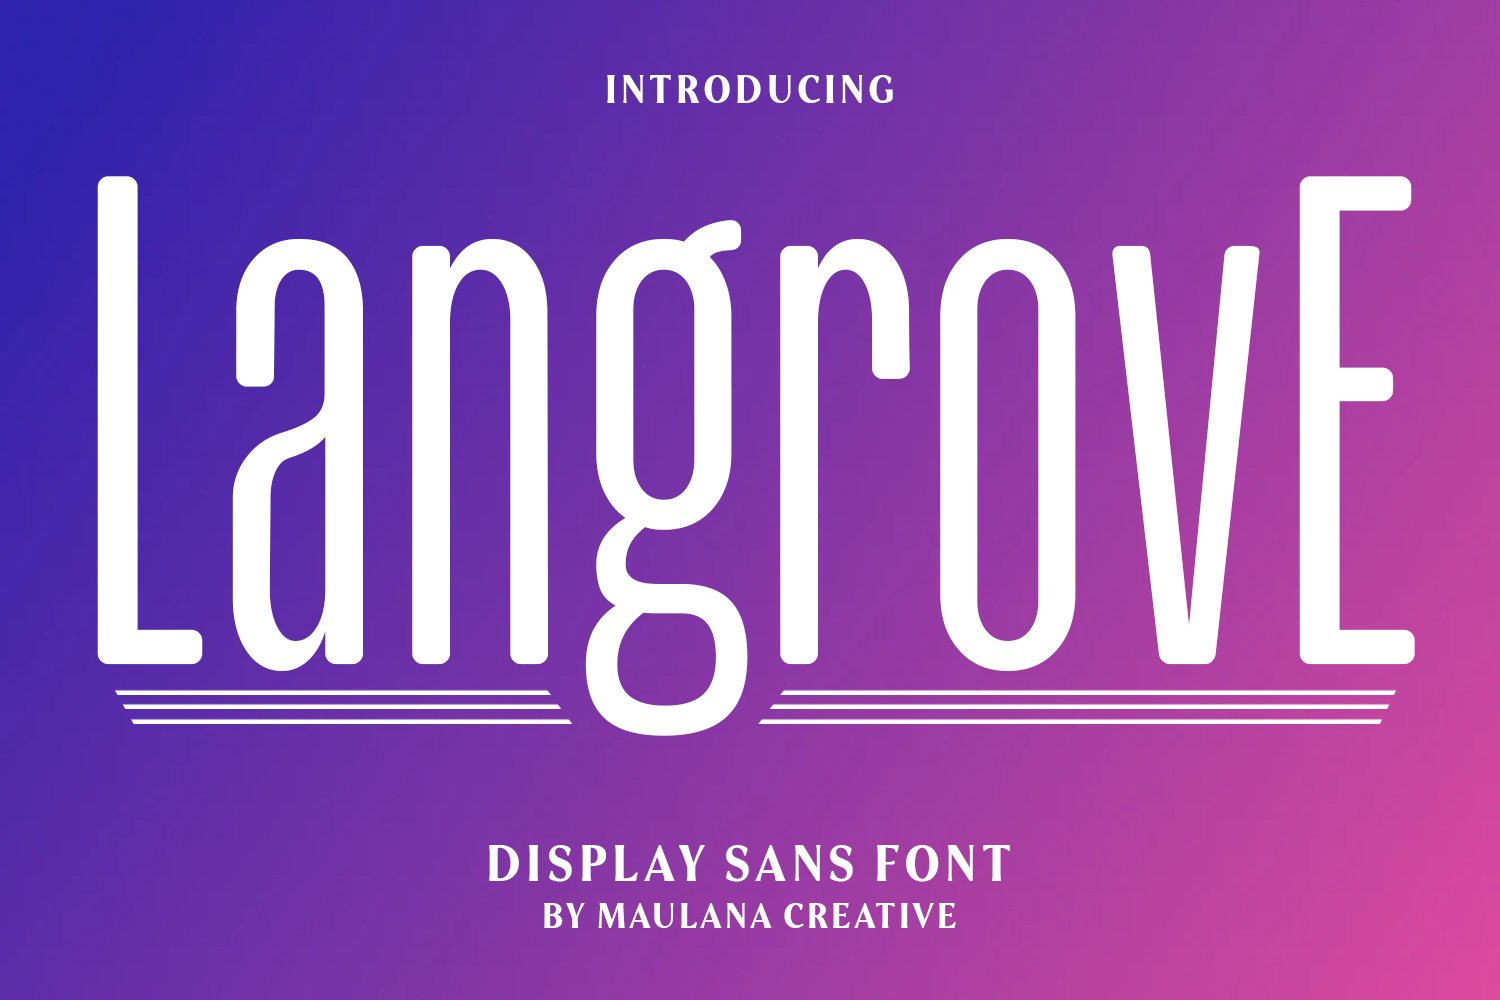 Langrove Sans Condensed Display Font cover image.